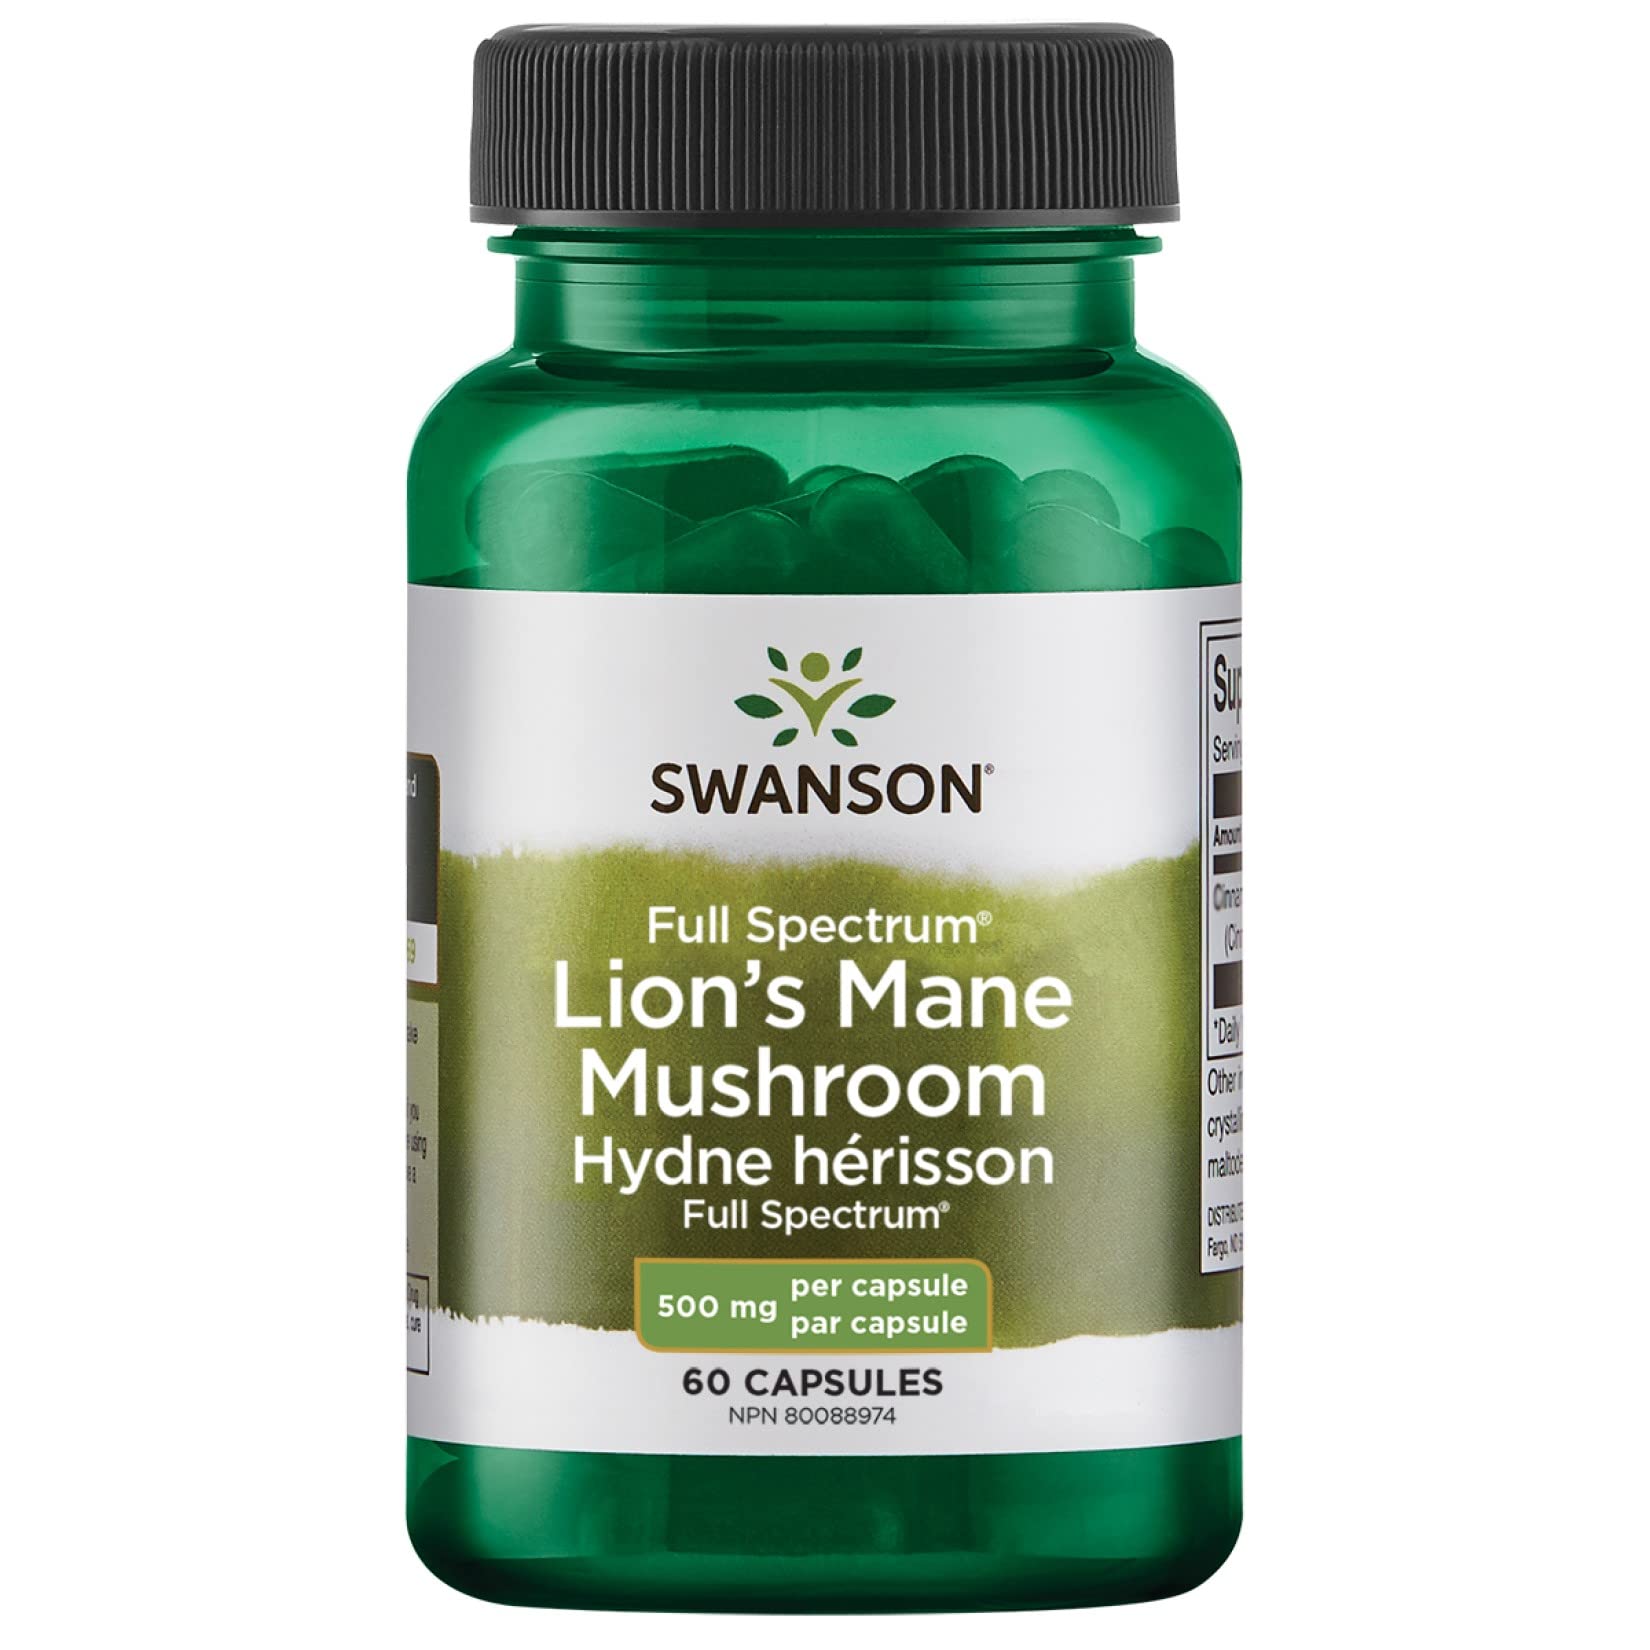 Swanson Lion's Mane Mushroom - 60 Capsules, 500mg Each